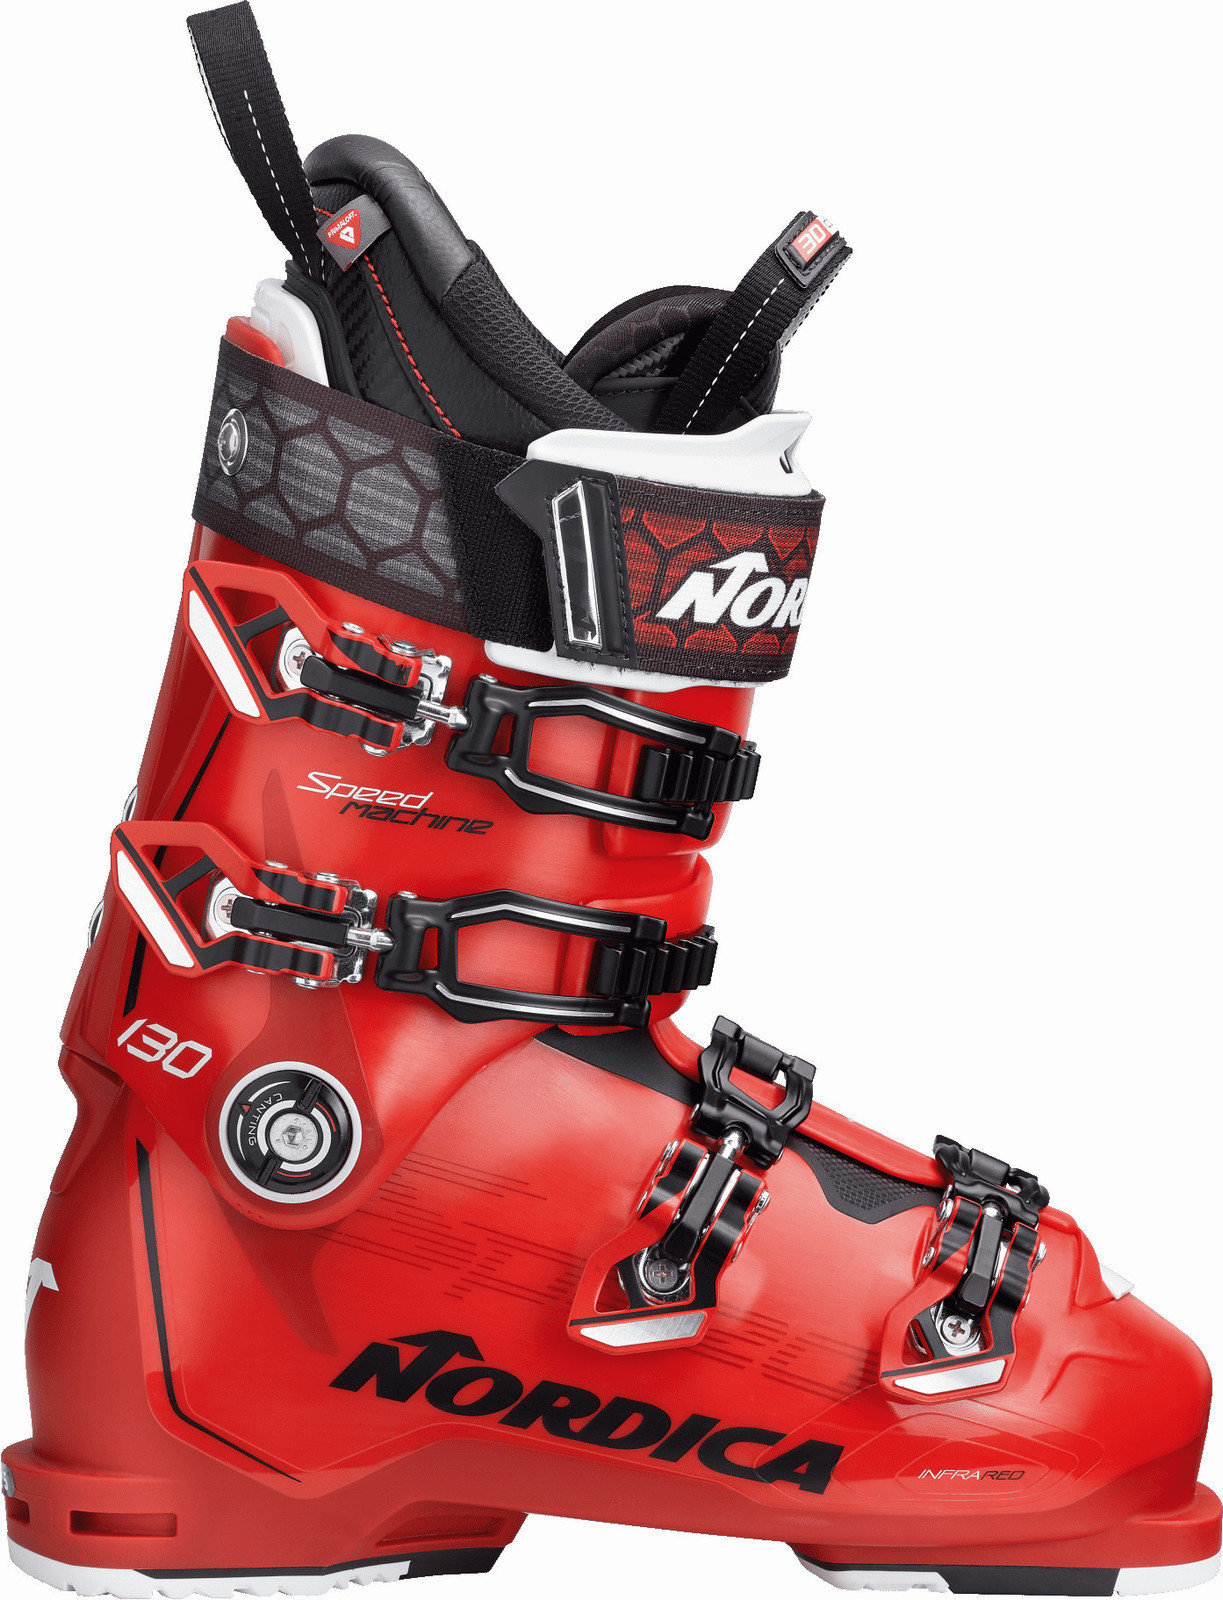 Botas de esquí alpino Nordica Speedmachine 130 Red-Black-White 27.5 18/19